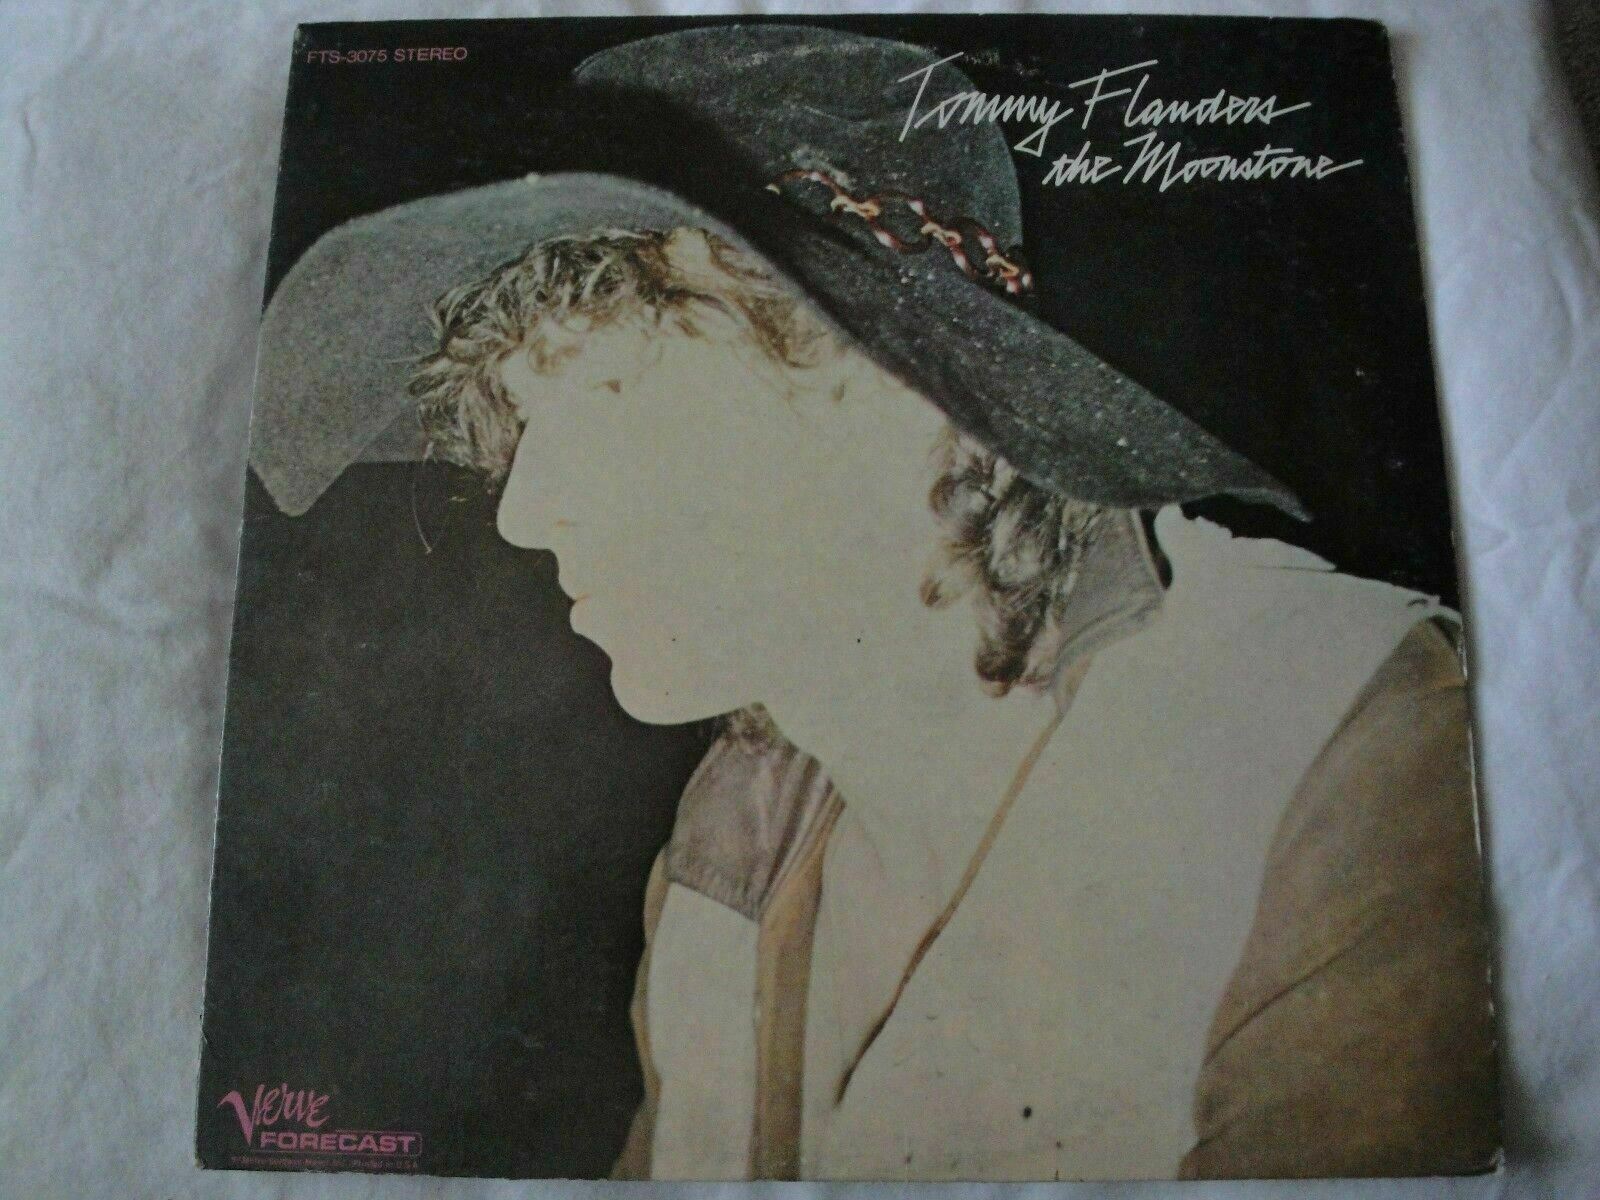 TOMMY FLANDERS THE MOONSTONE VINYL LP 1969 VERVE FORECAST SINCE YOU'VE BEEN GONE